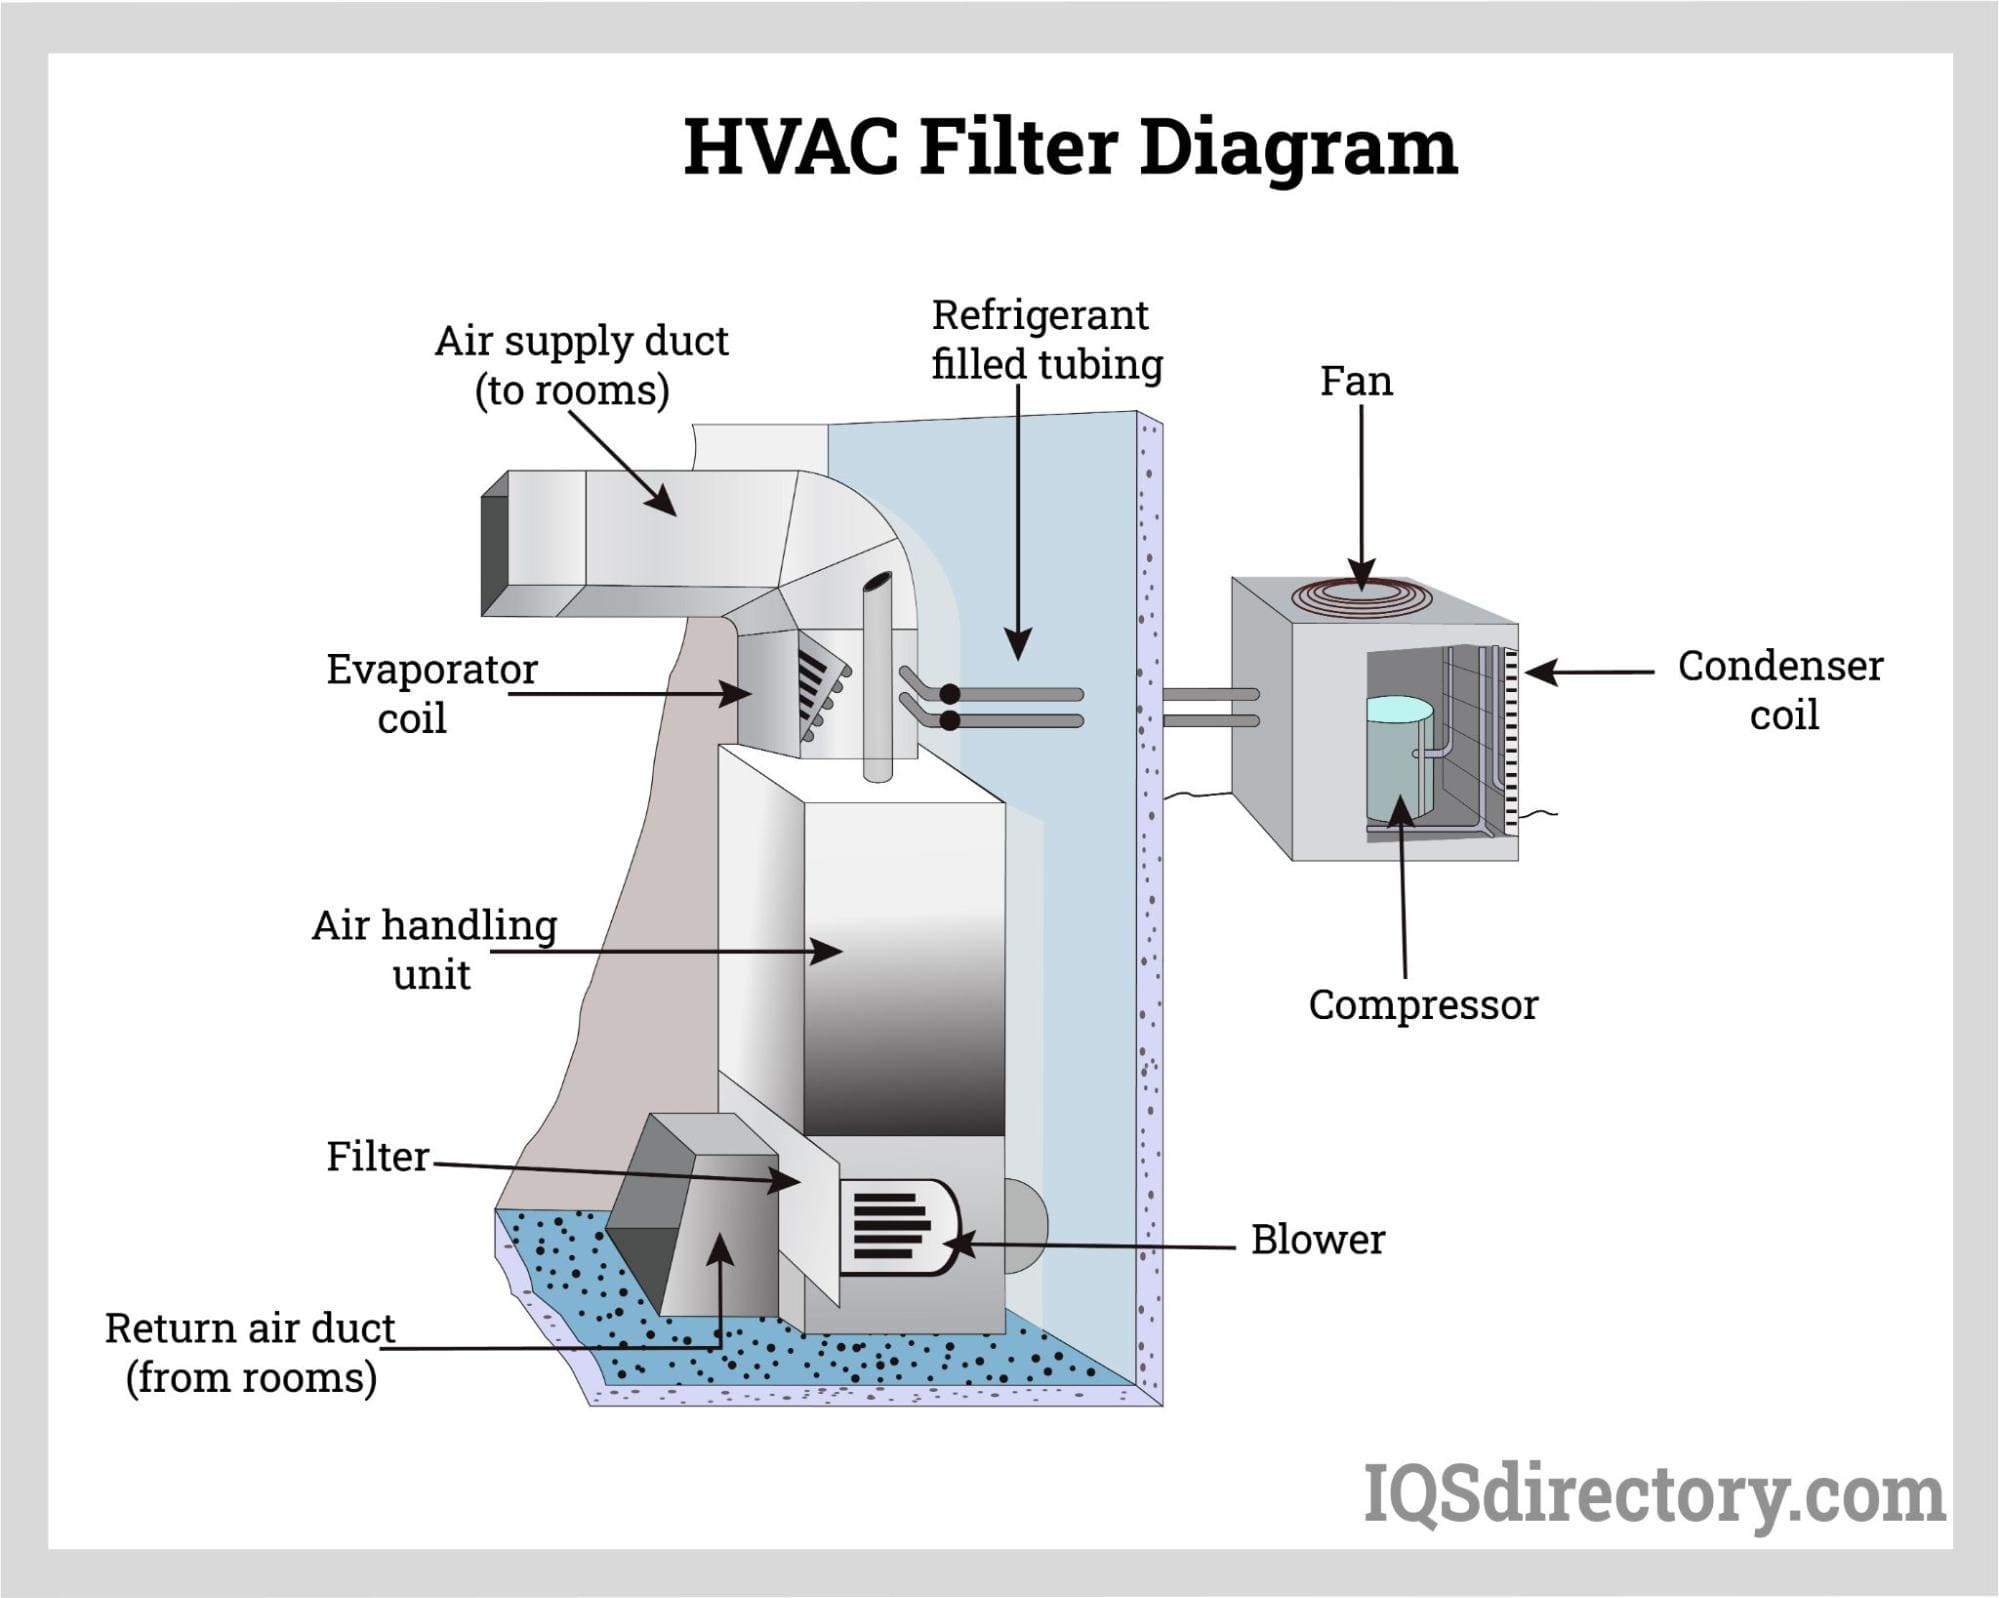 HVAC Filter Diagram